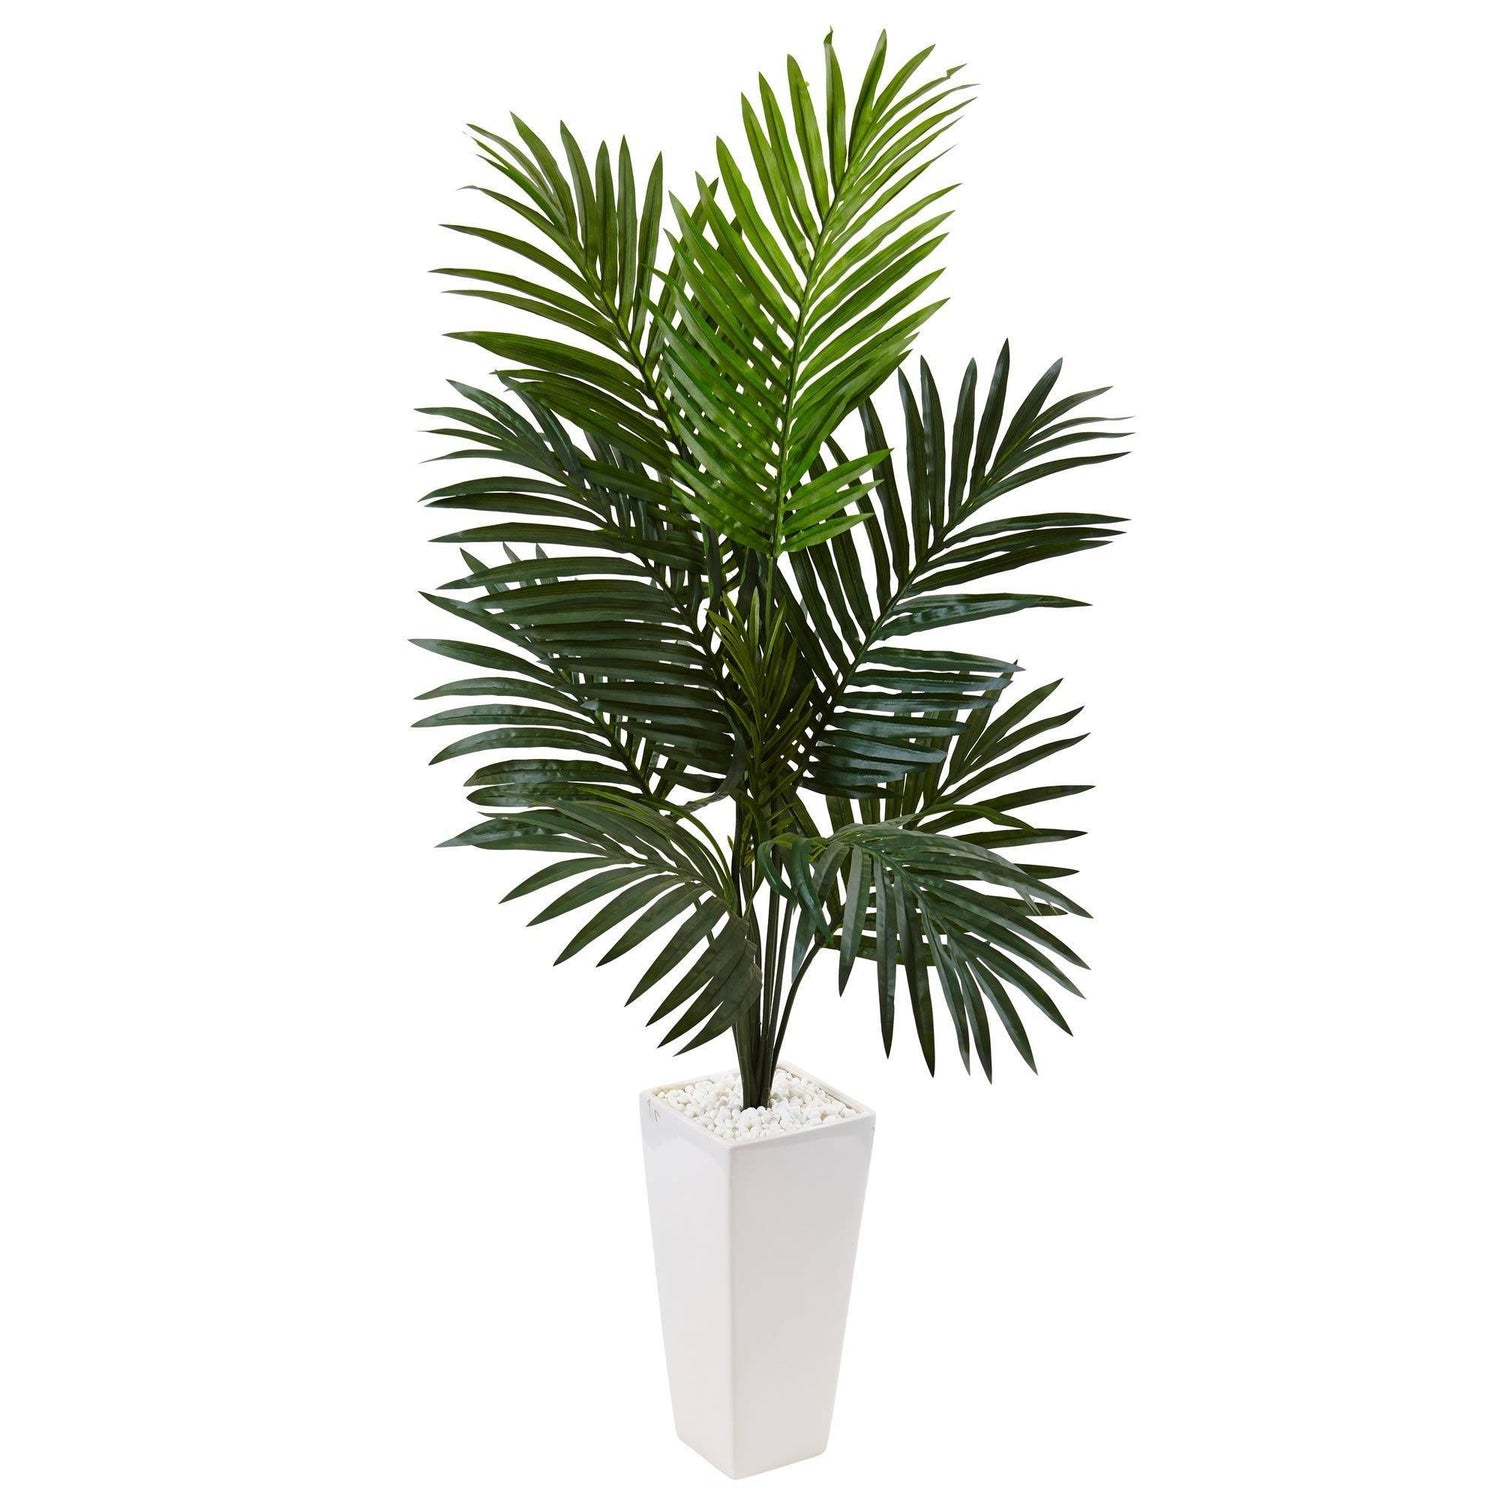 4.5’ Kentia Palm Tree in White Tower Planter